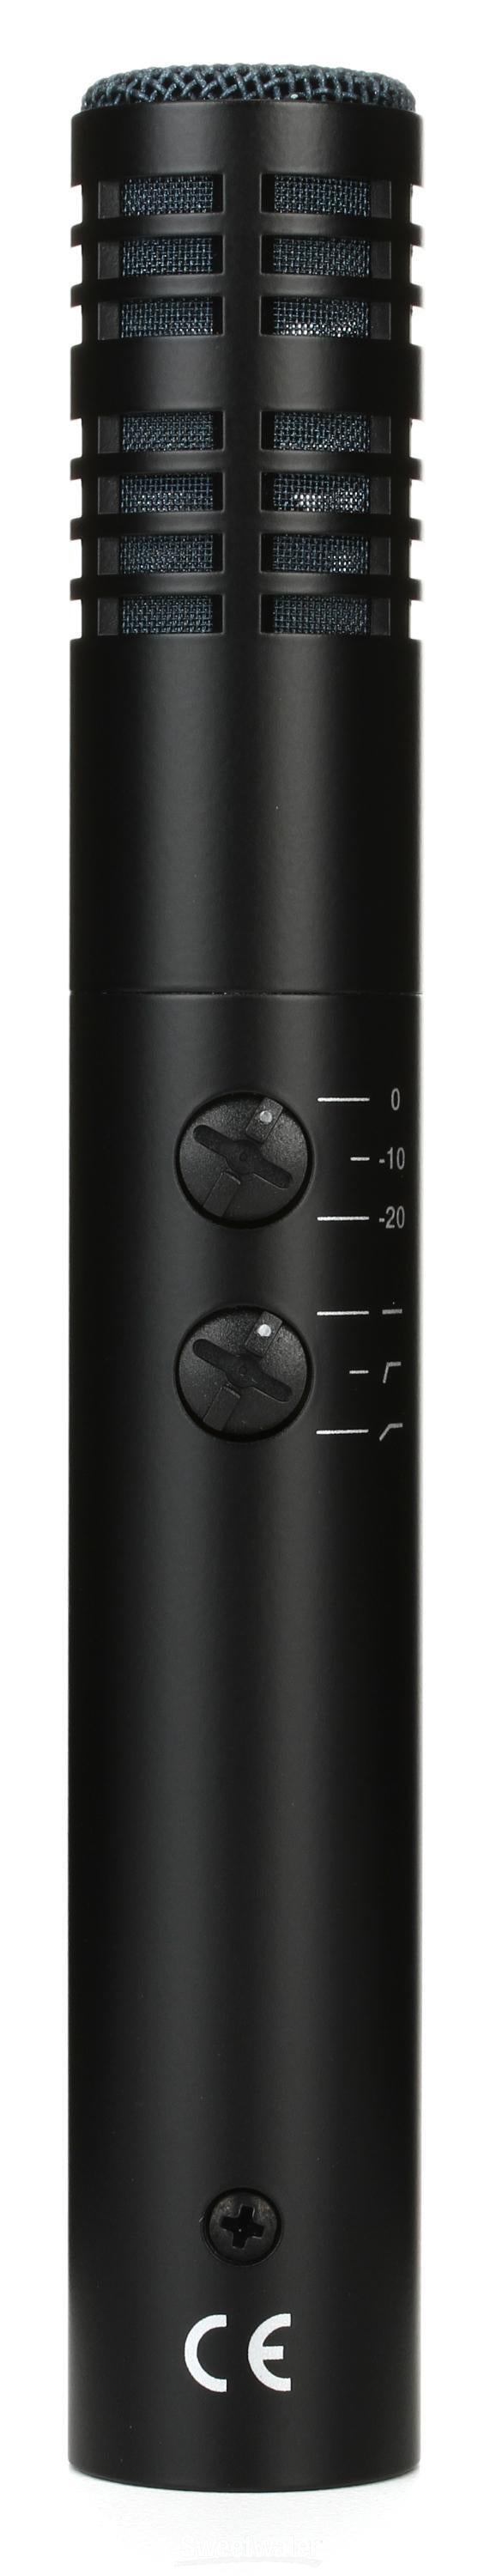 Sennheiser e 914 Small-diaphragm Condenser Microphone | Sweetwater